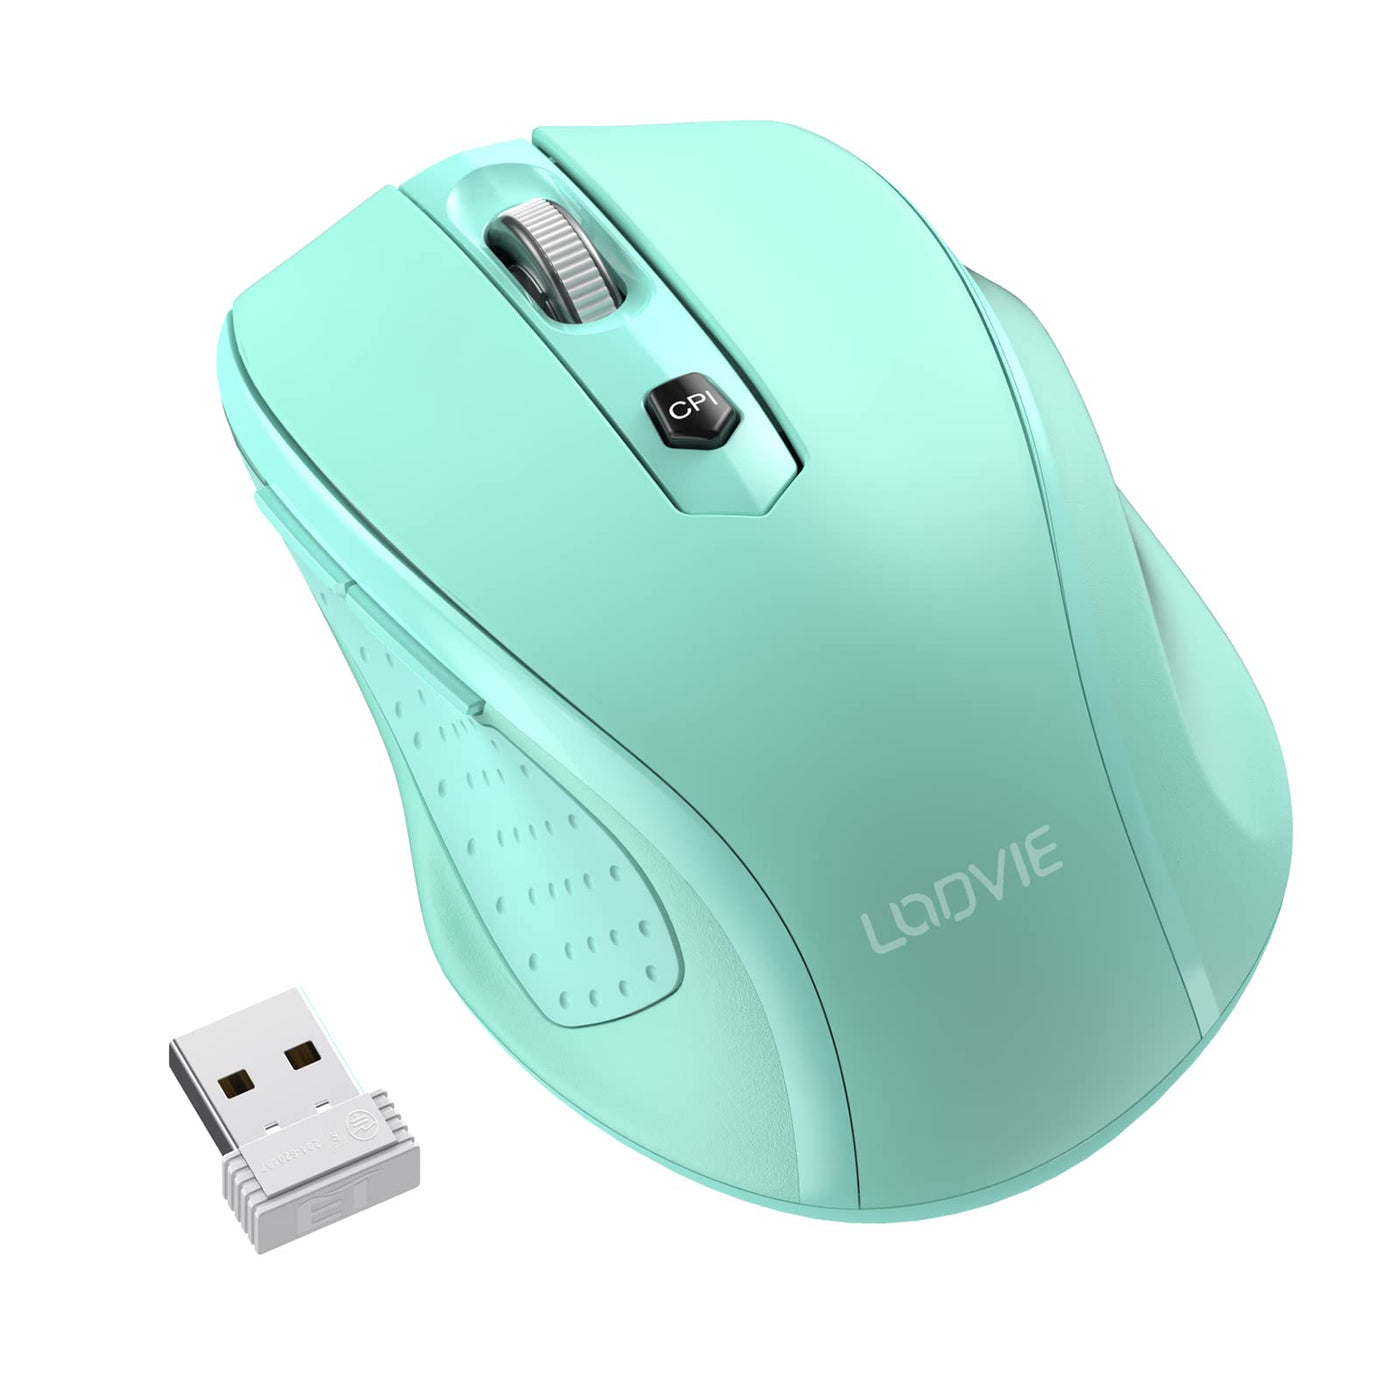 LODVIE Wireless Mouse for Laptop,2400 DPI Wireless Computer Mouse with 6  Buttons,2.4G Ergonomic USB Cordless Mouse,15 Months Battery Life Mouse for Laptop  PC Mac Desktop Chromebook MacBook-Mint Green